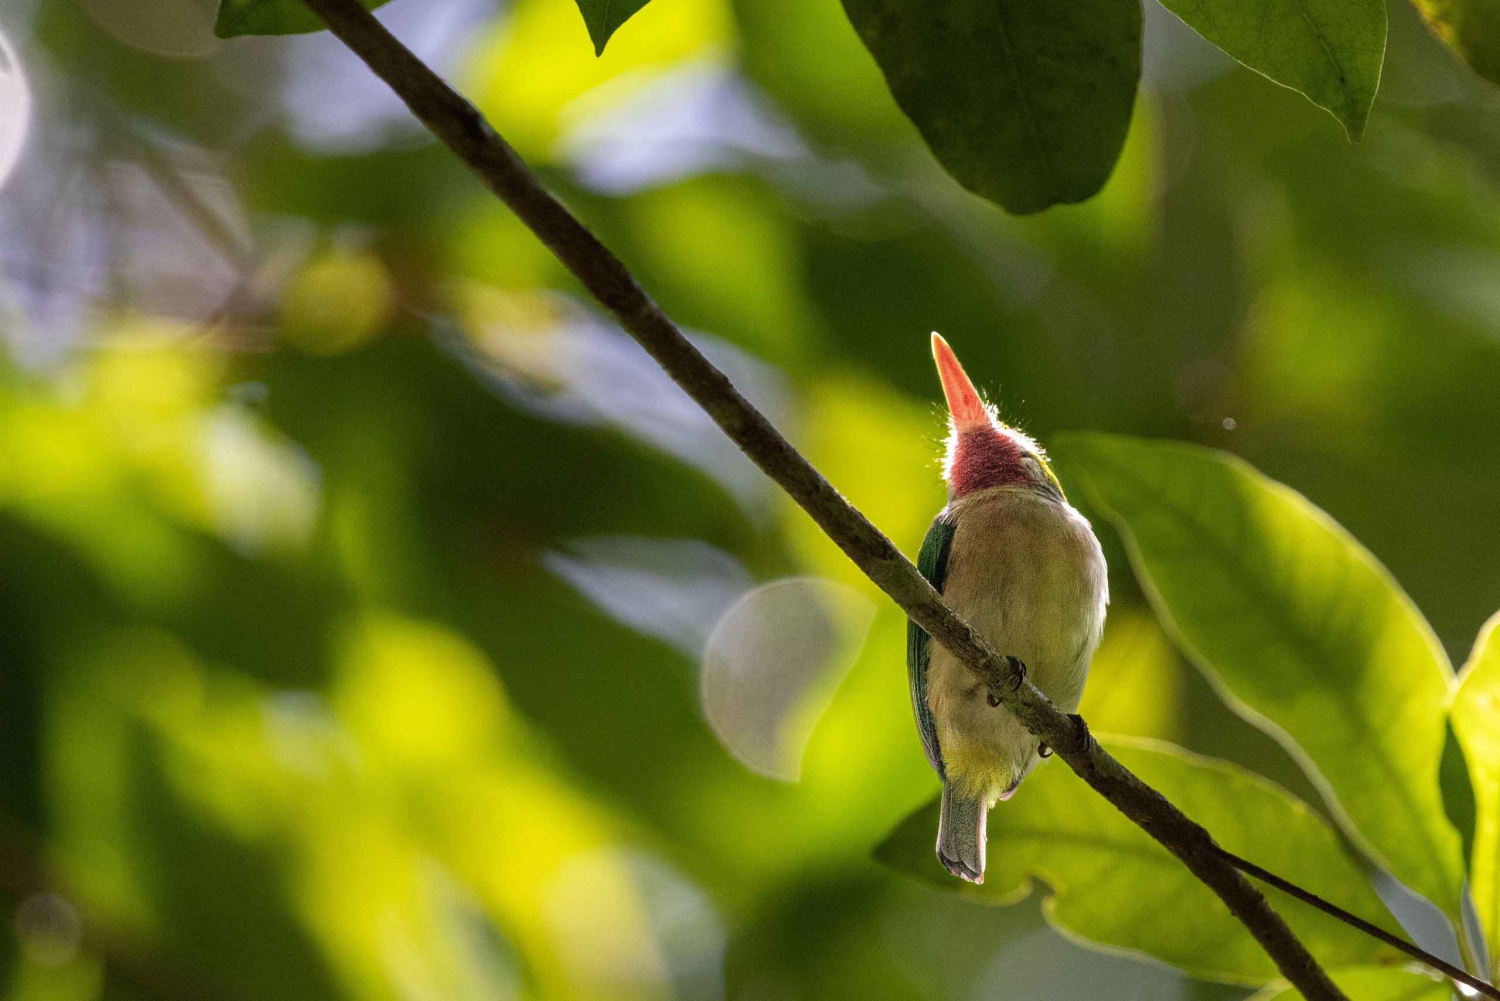 Dominican Republic: One Week Bird Watching Full Experience